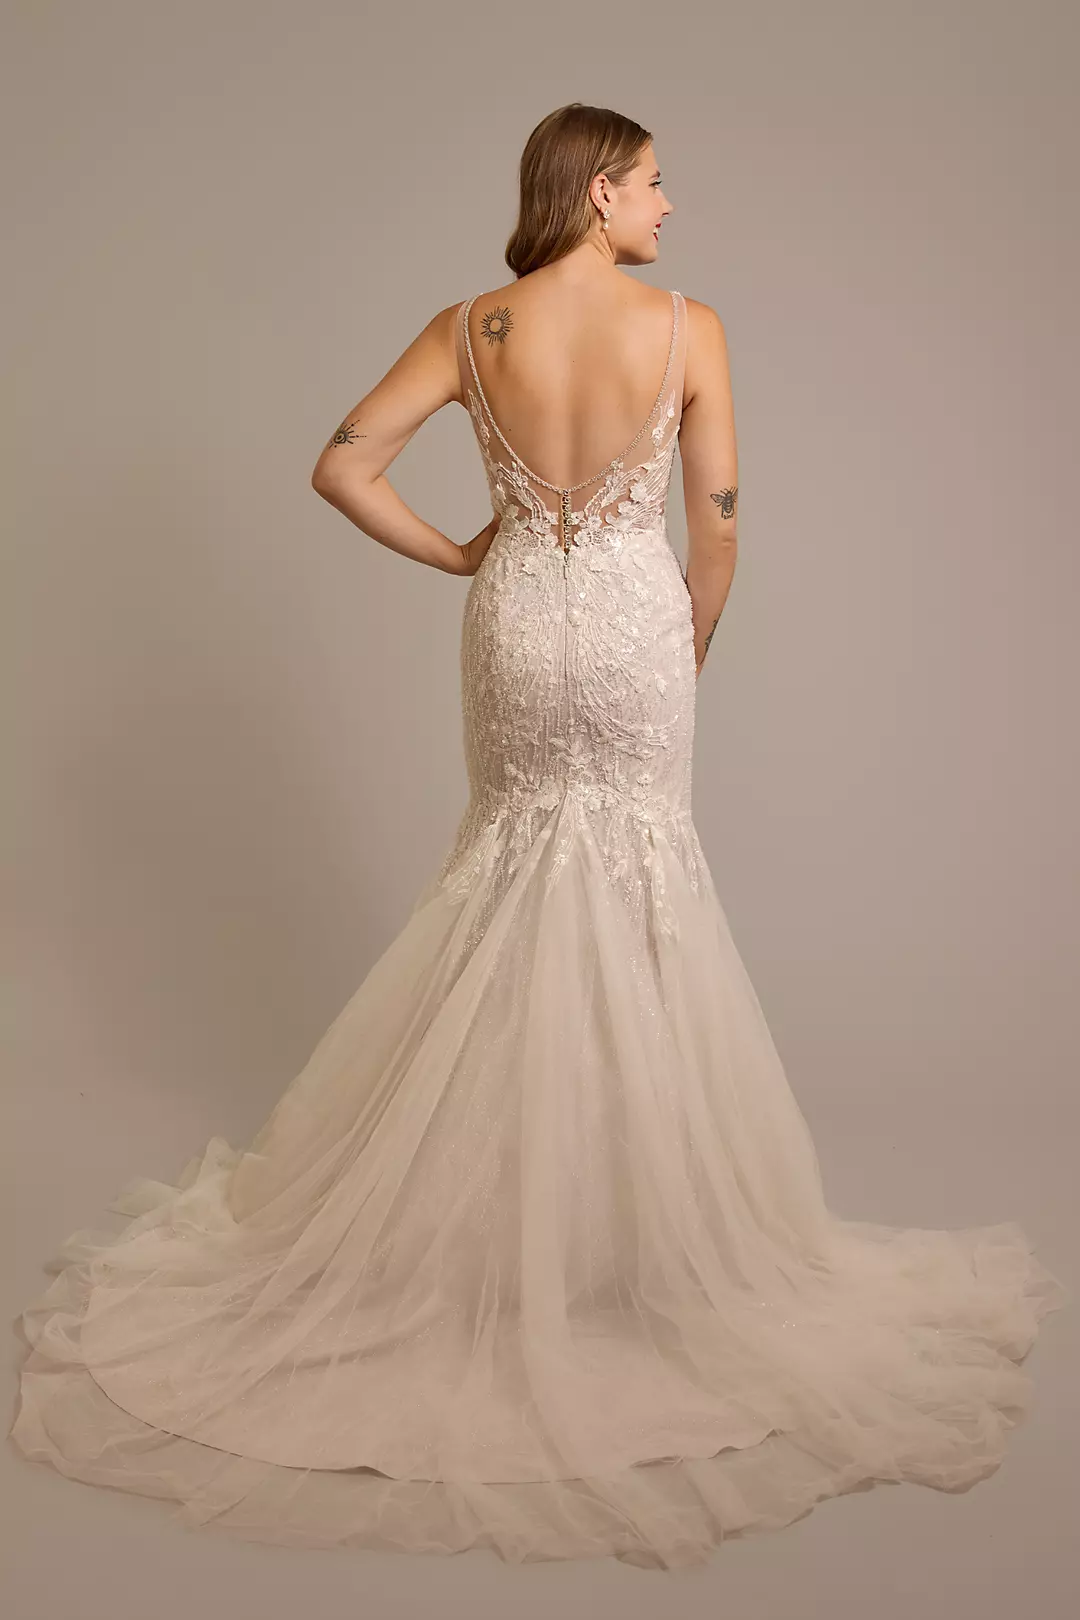 Beaded Lace Applique Tulle Mermaid Wedding Dress Image 2